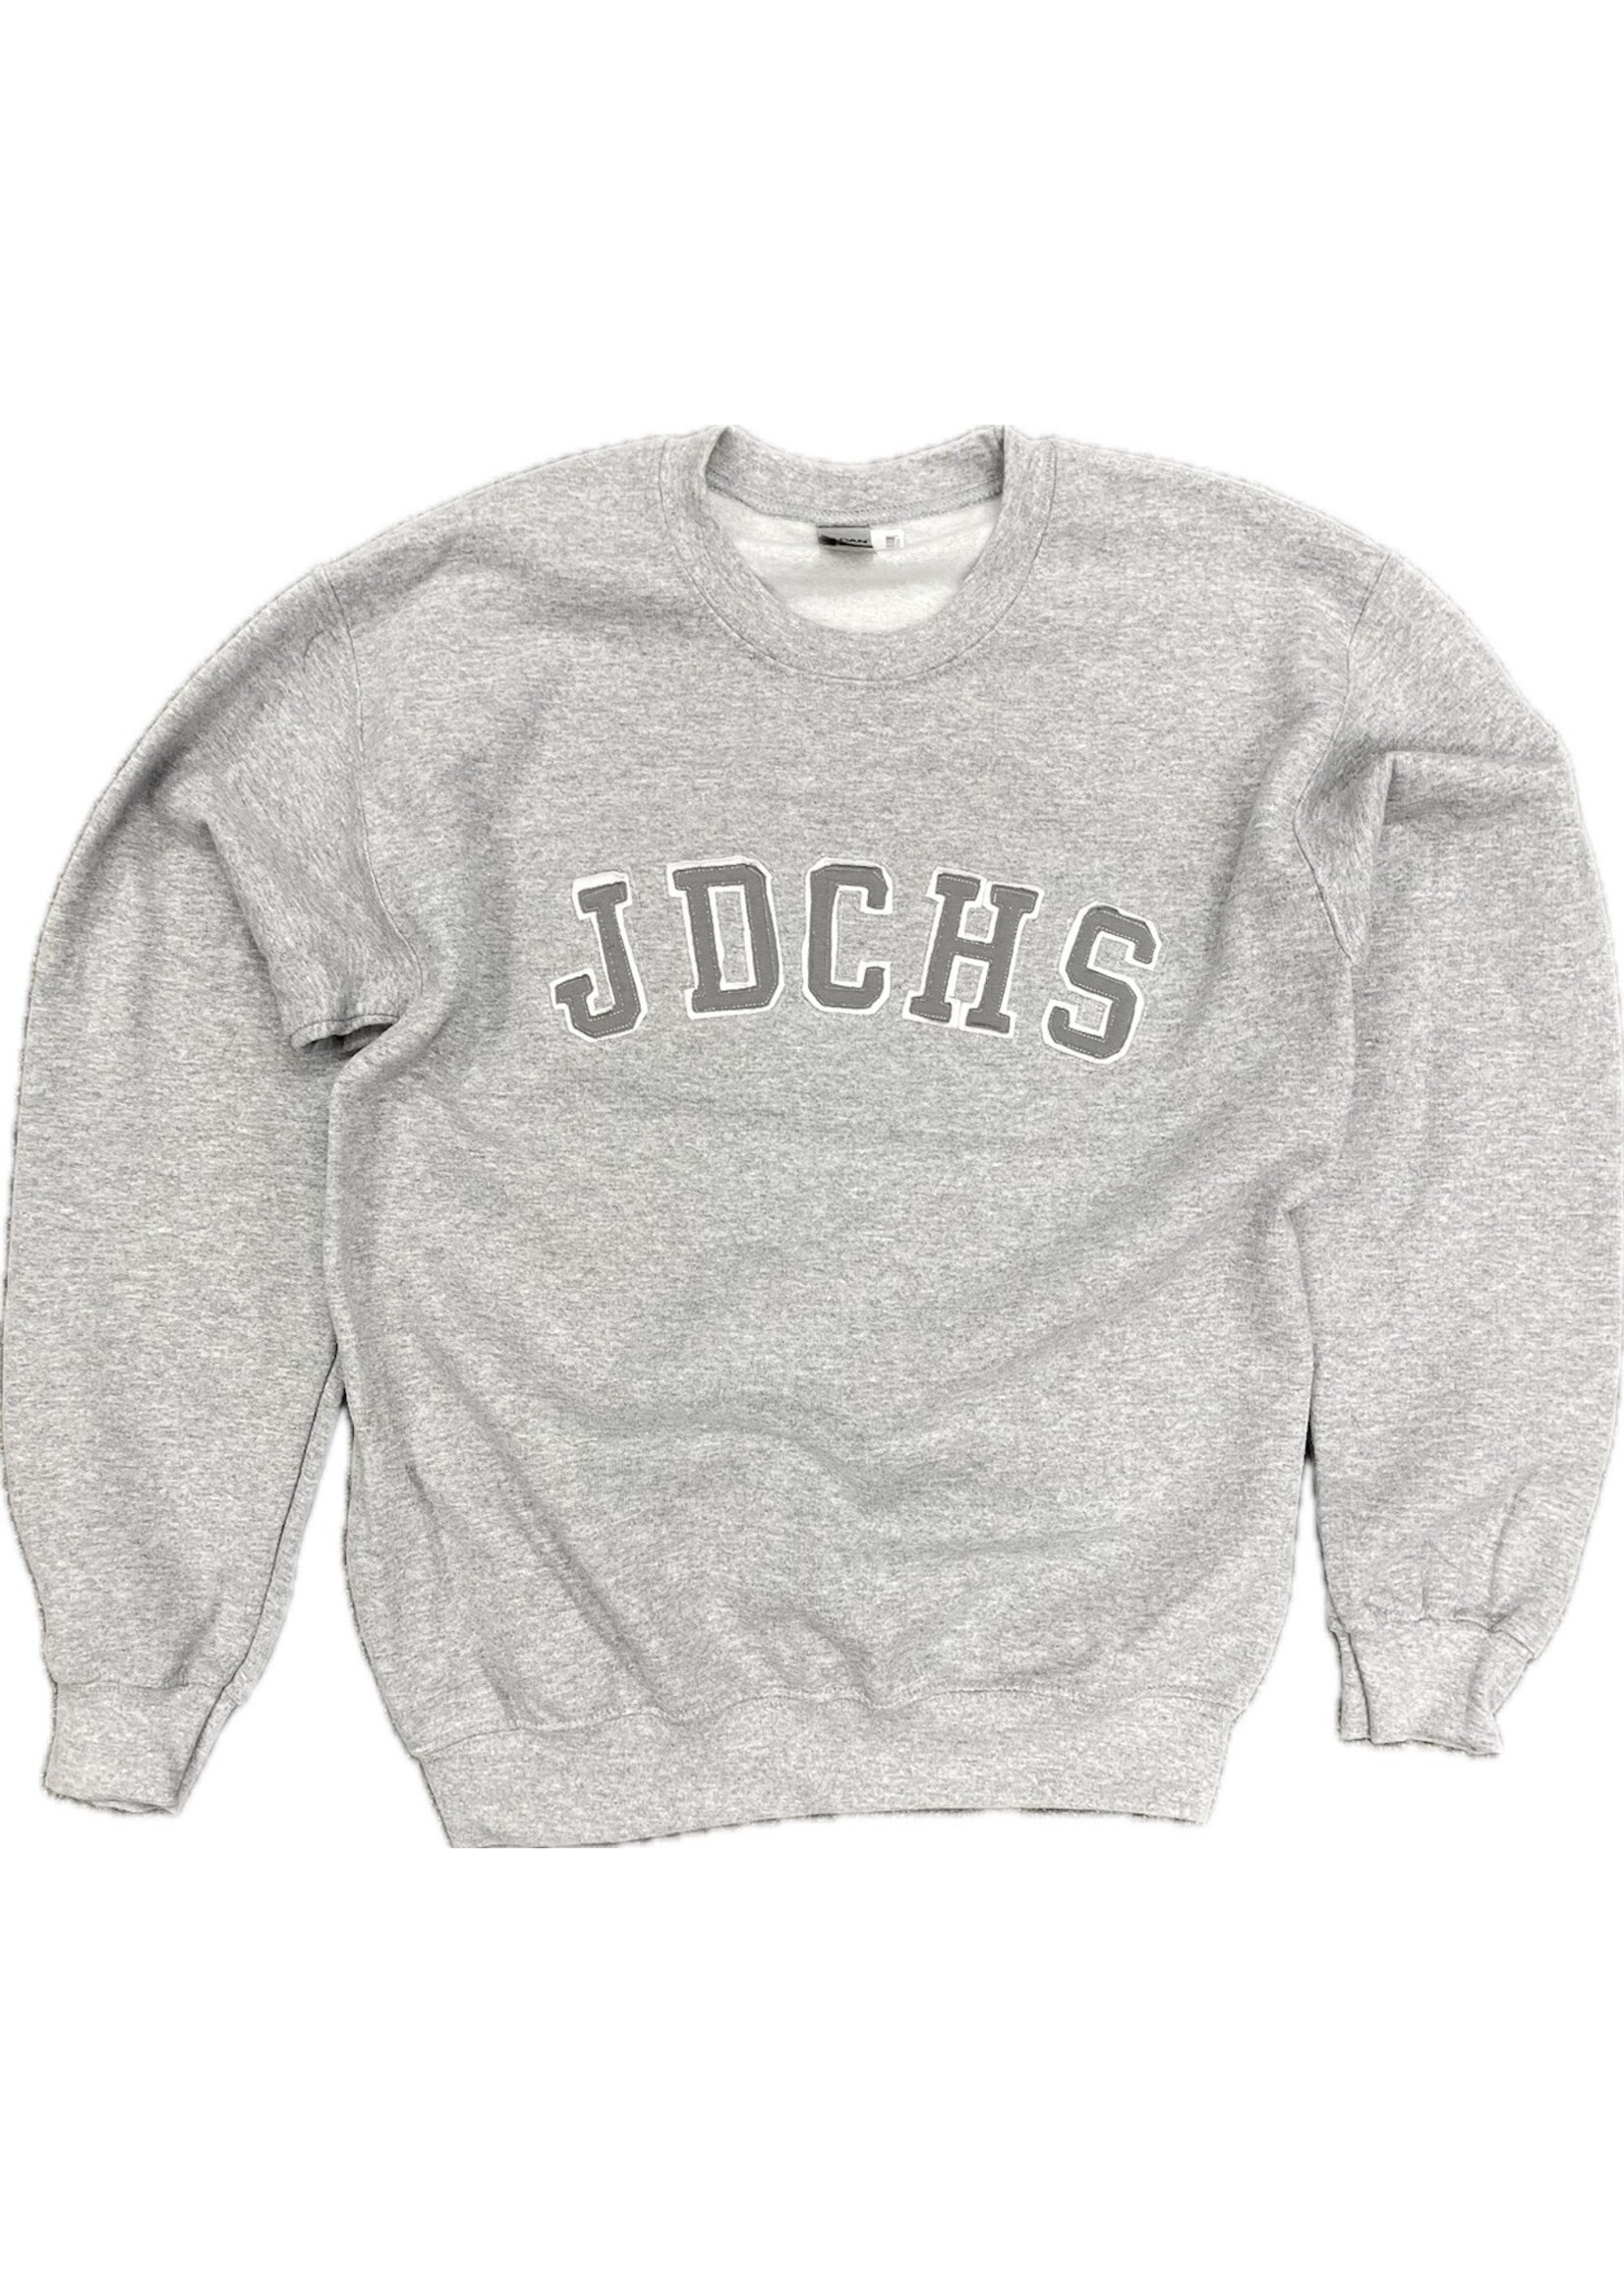 NON-UNIFORM NEW - Sweatshirt - JDCHS Fabric Applique Crew